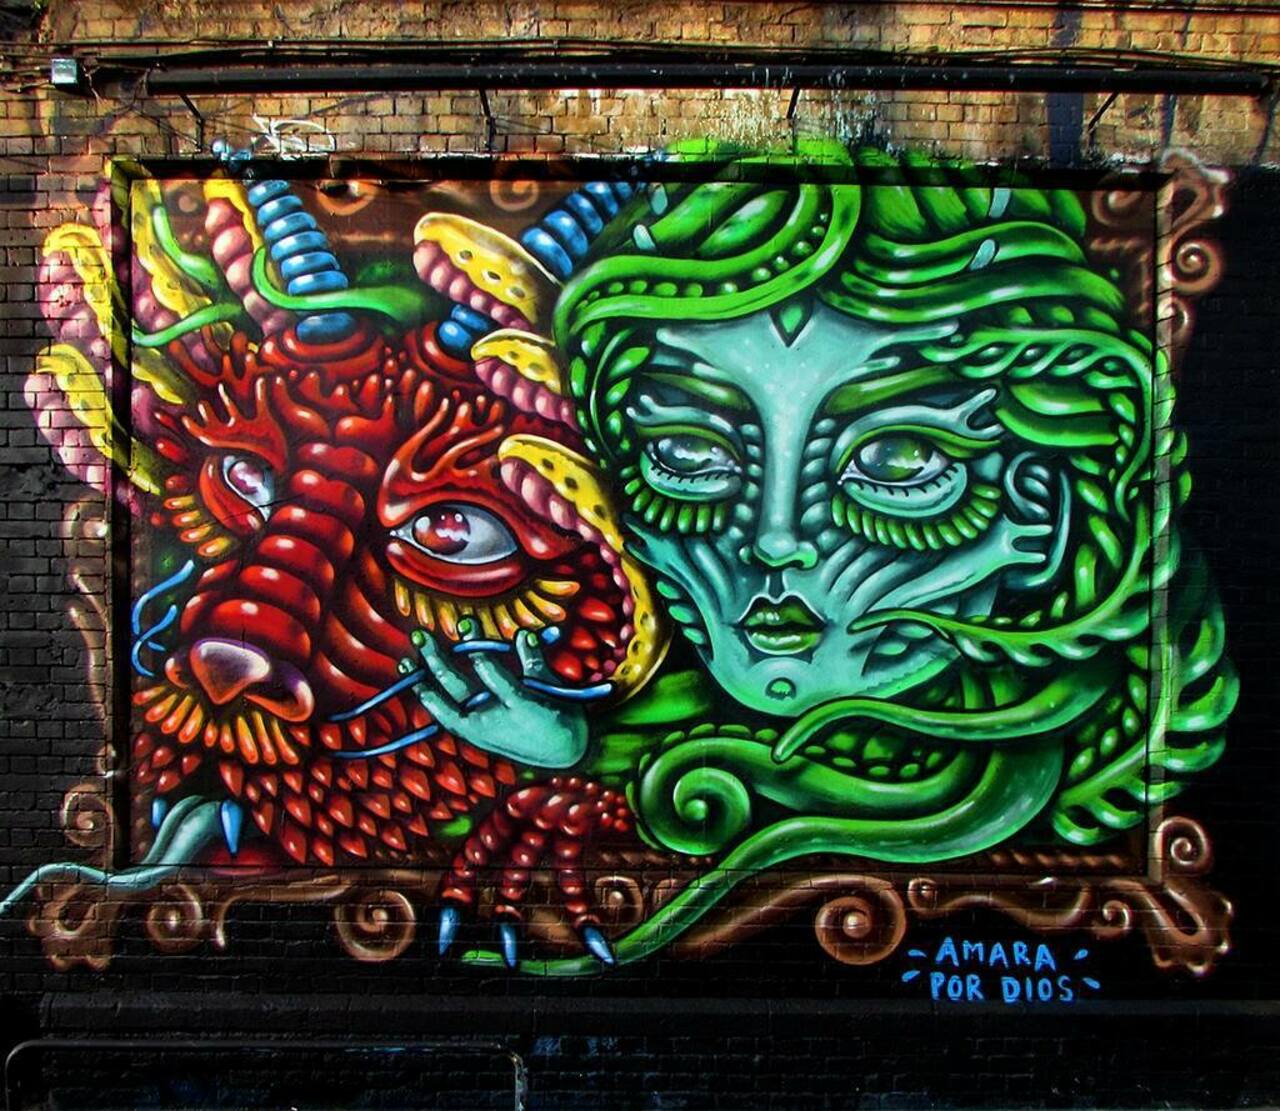 By @amarapordios 
#shoreditchcurtain #streetart #graffiti #dsb_graff #tv_streetart #shoreditch #londonstreetart #st… http://t.co/Fk7pcwF1us